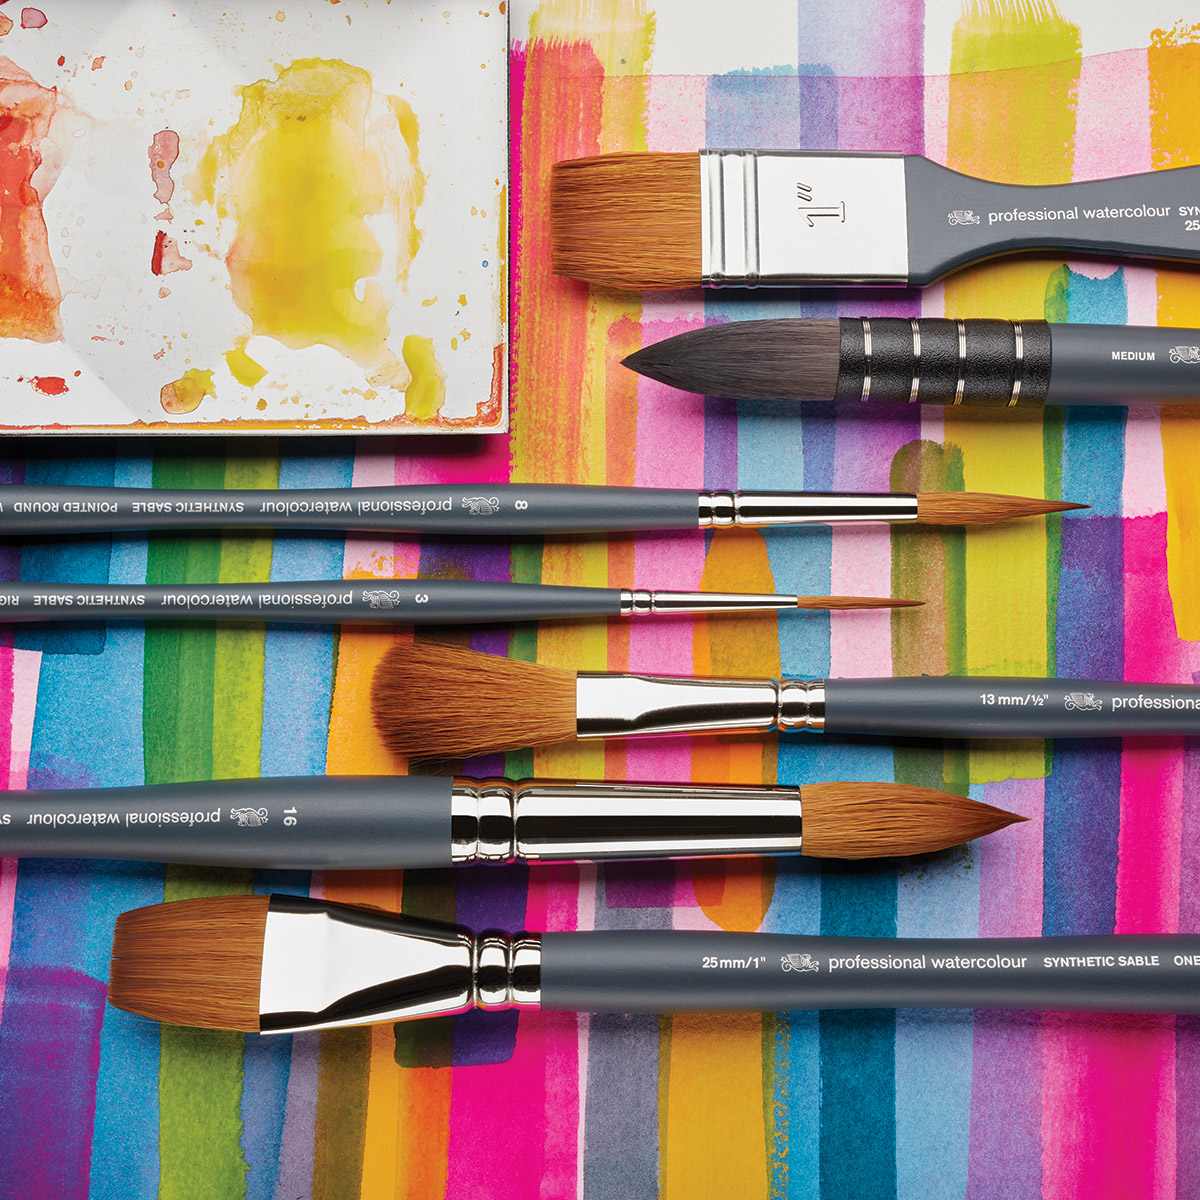 Winsor & Newton Professional Watercolor Synthetic Brush Quill Medium